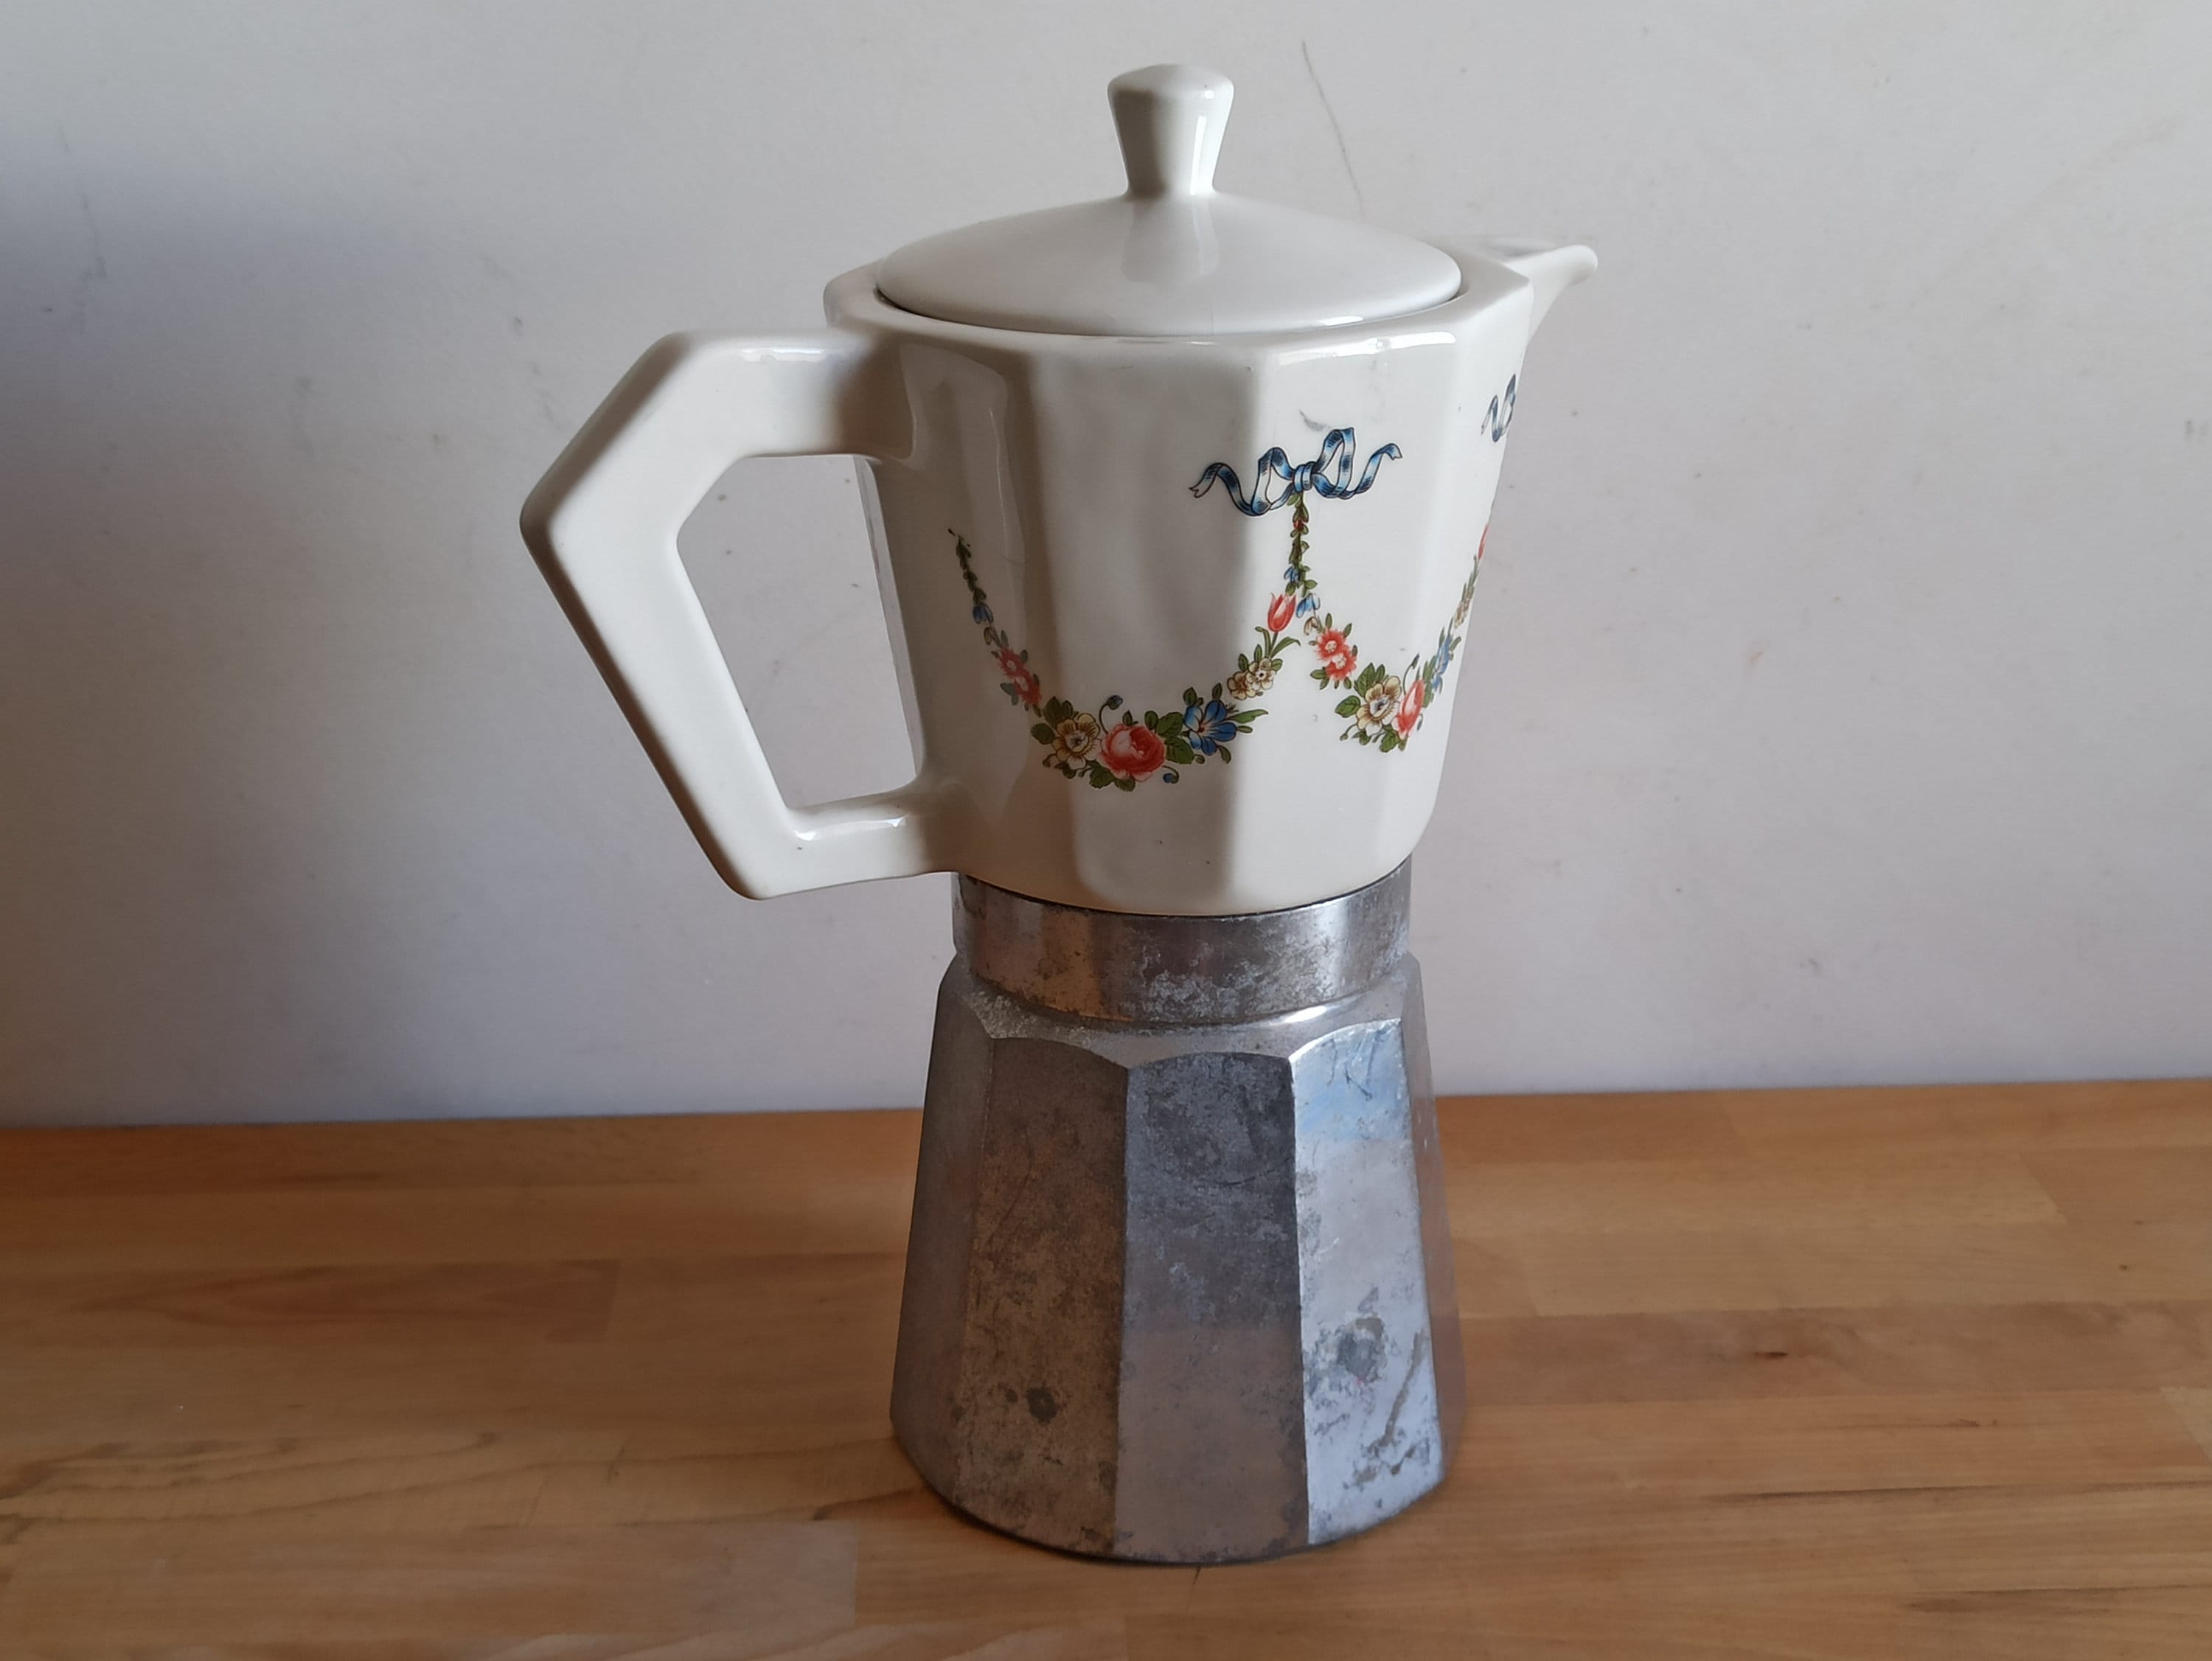 XXL Vintage Stovetop Moka Pot With Ceramic Top, Italian Espresso Maker,  About 12 Cups Coffee Pot, 1960 